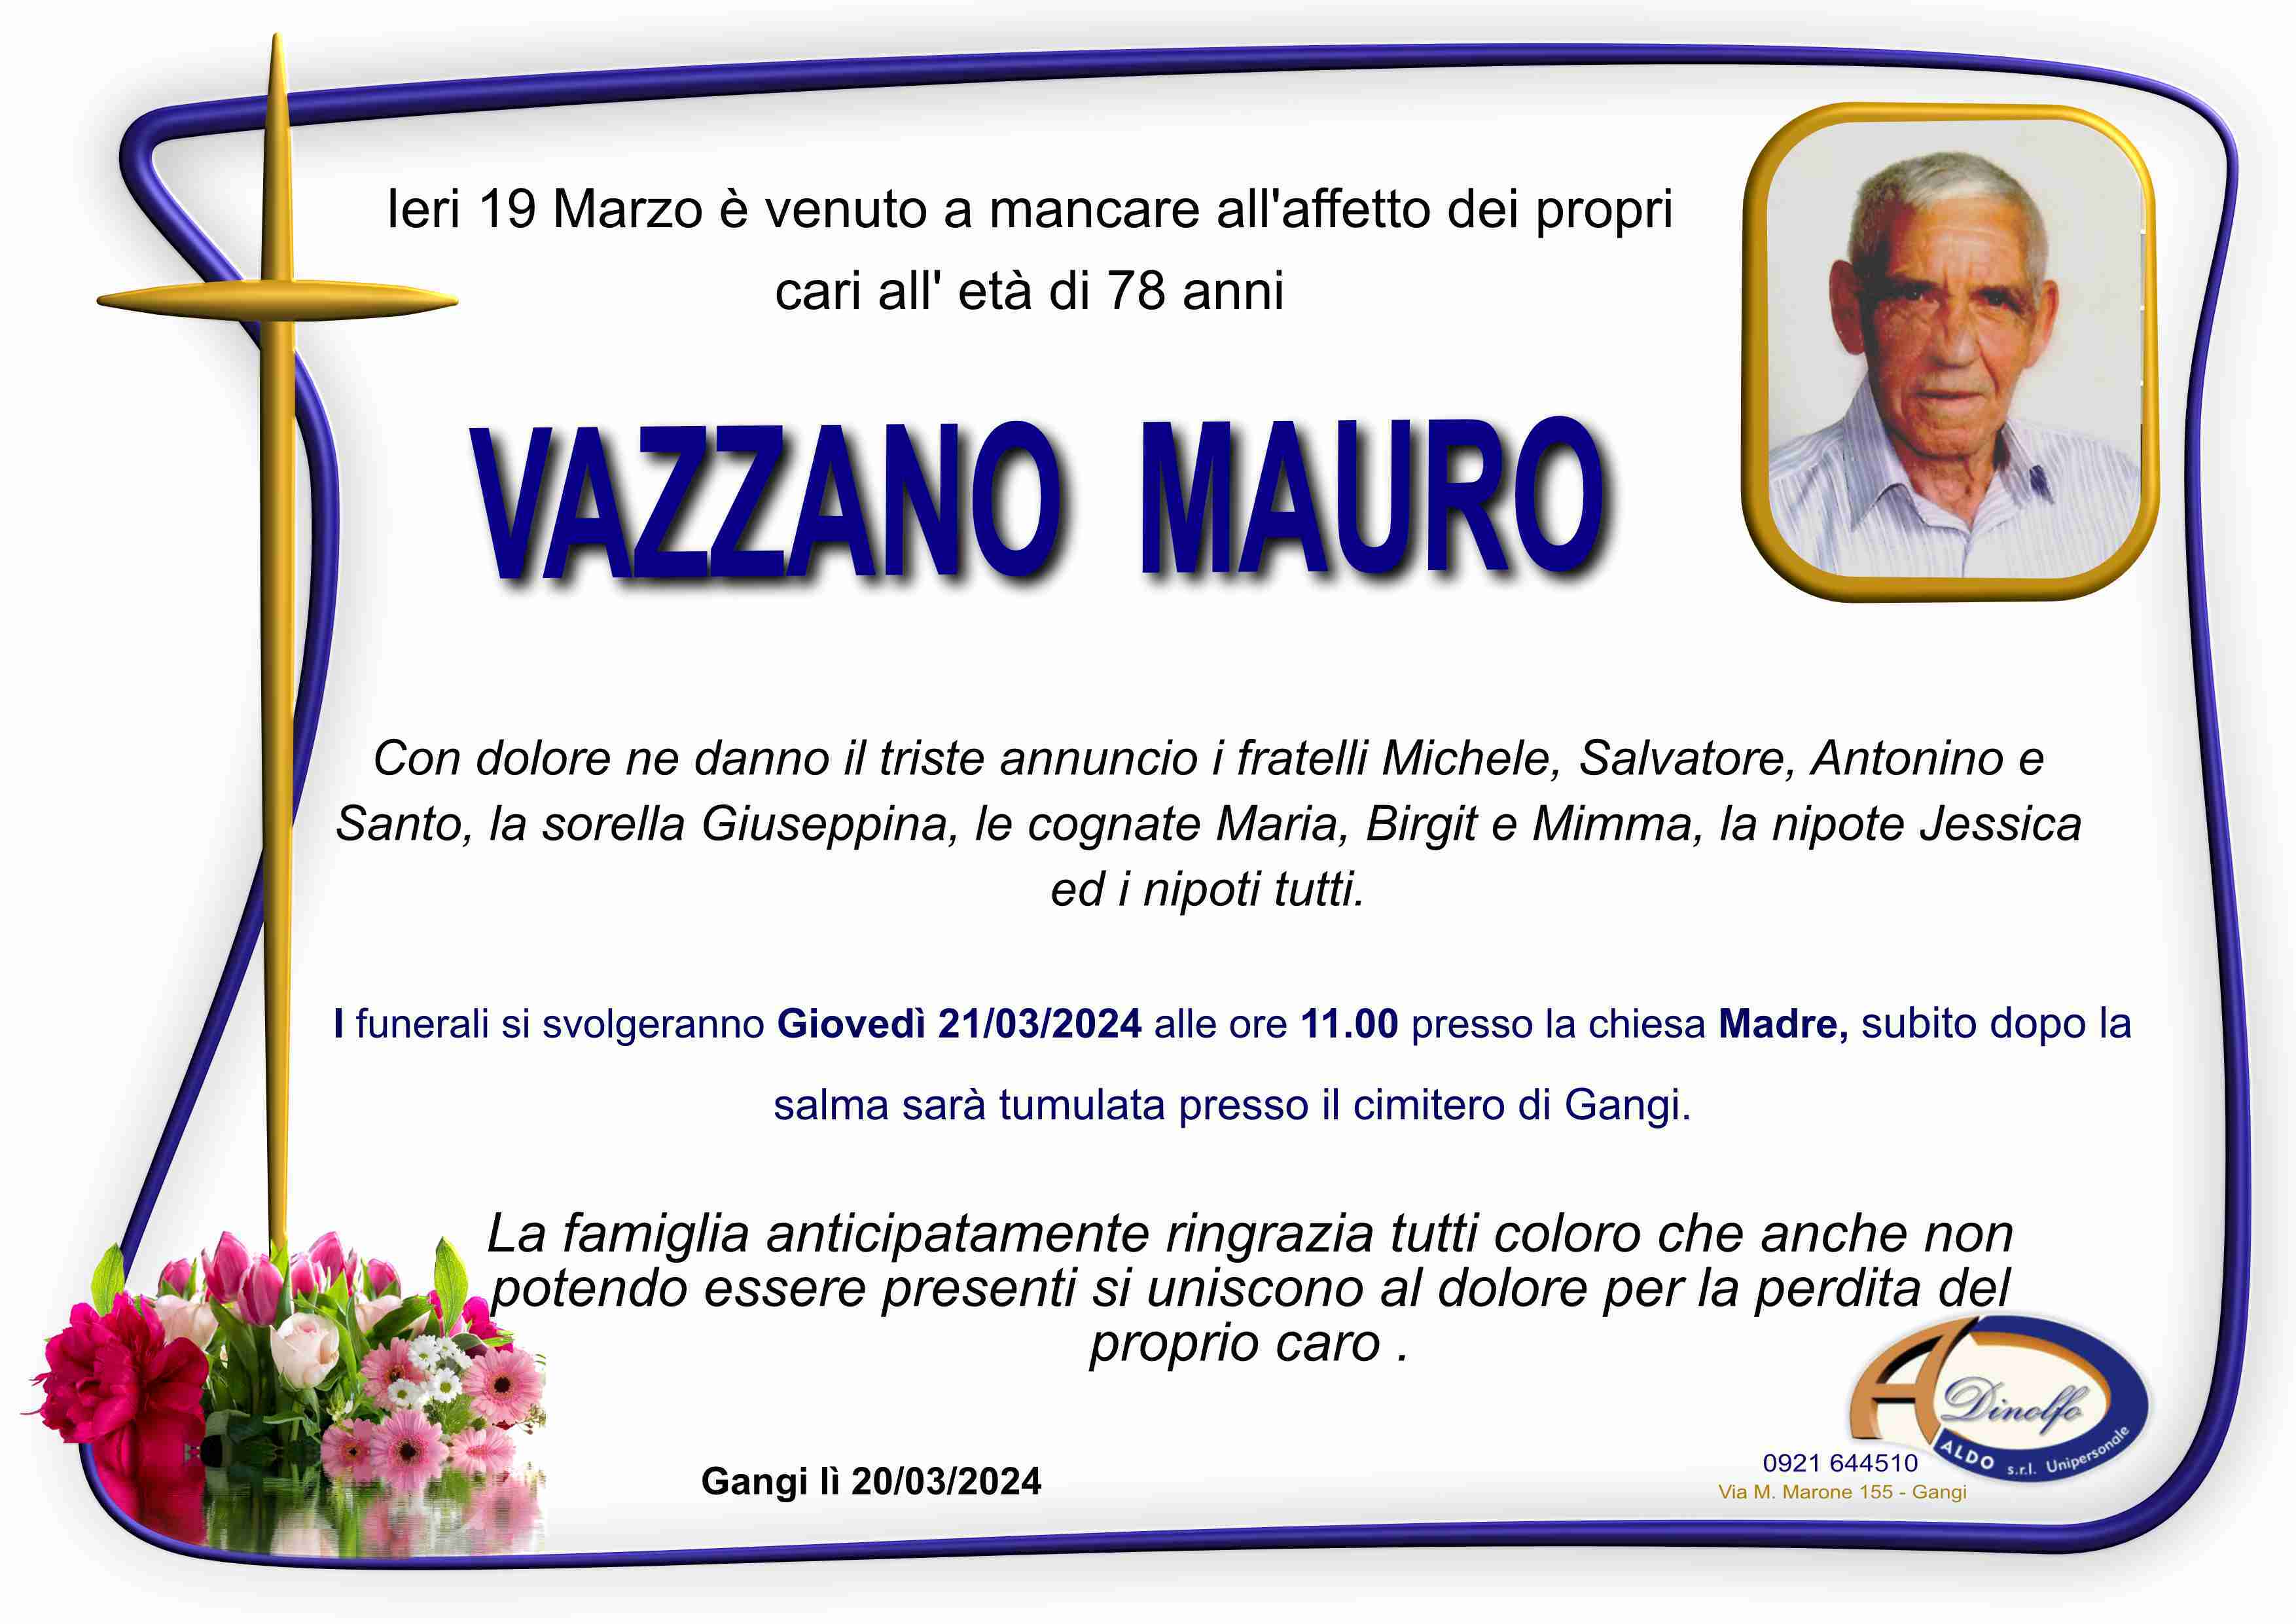 Mauro Vazzano